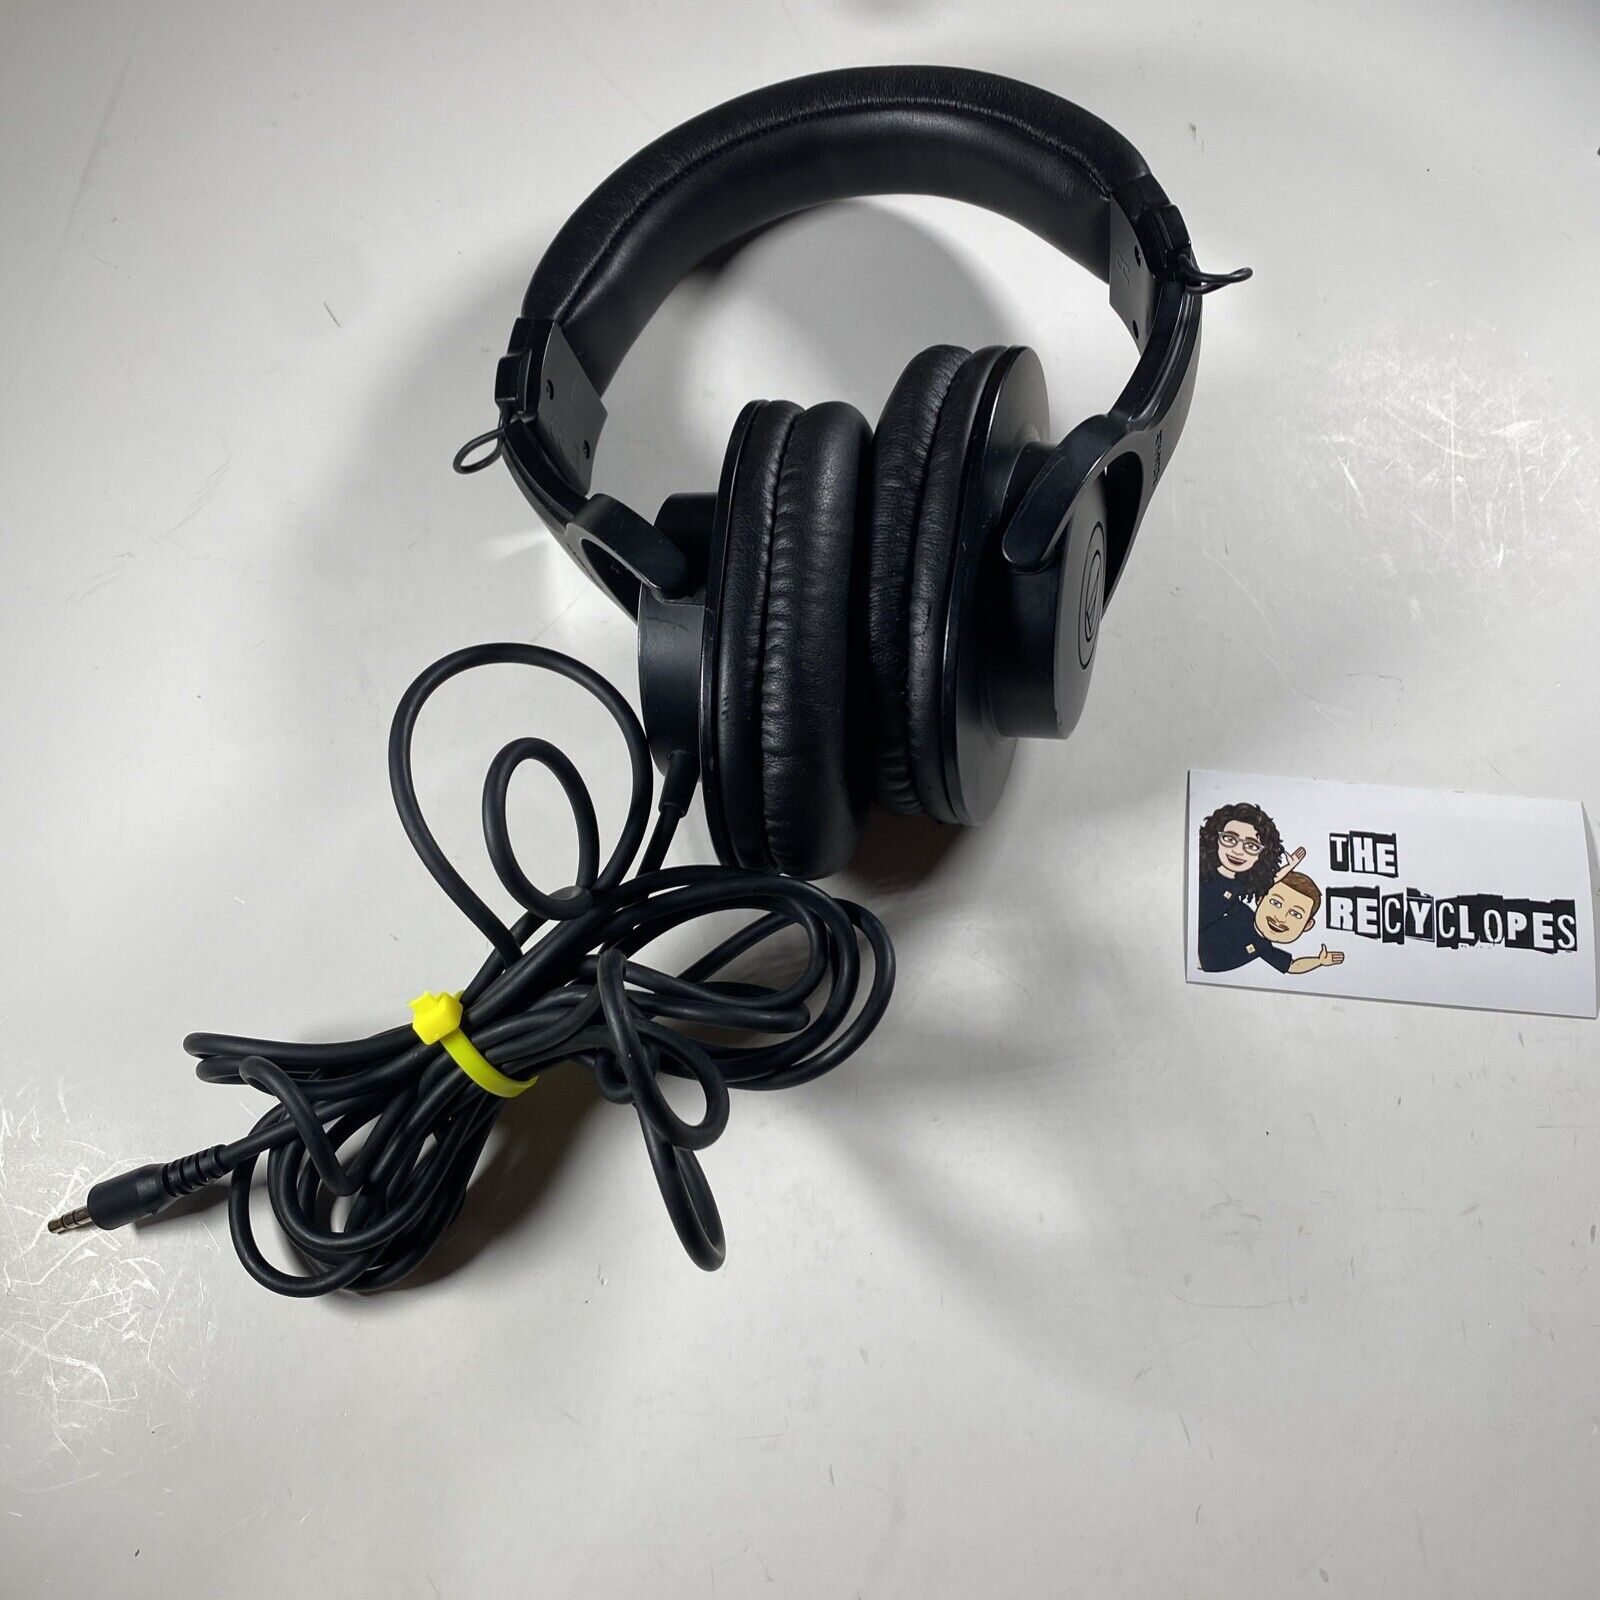 Audio-Technica M-Series ATH-M20x Professional Monitor Headphones (Black) TESTED